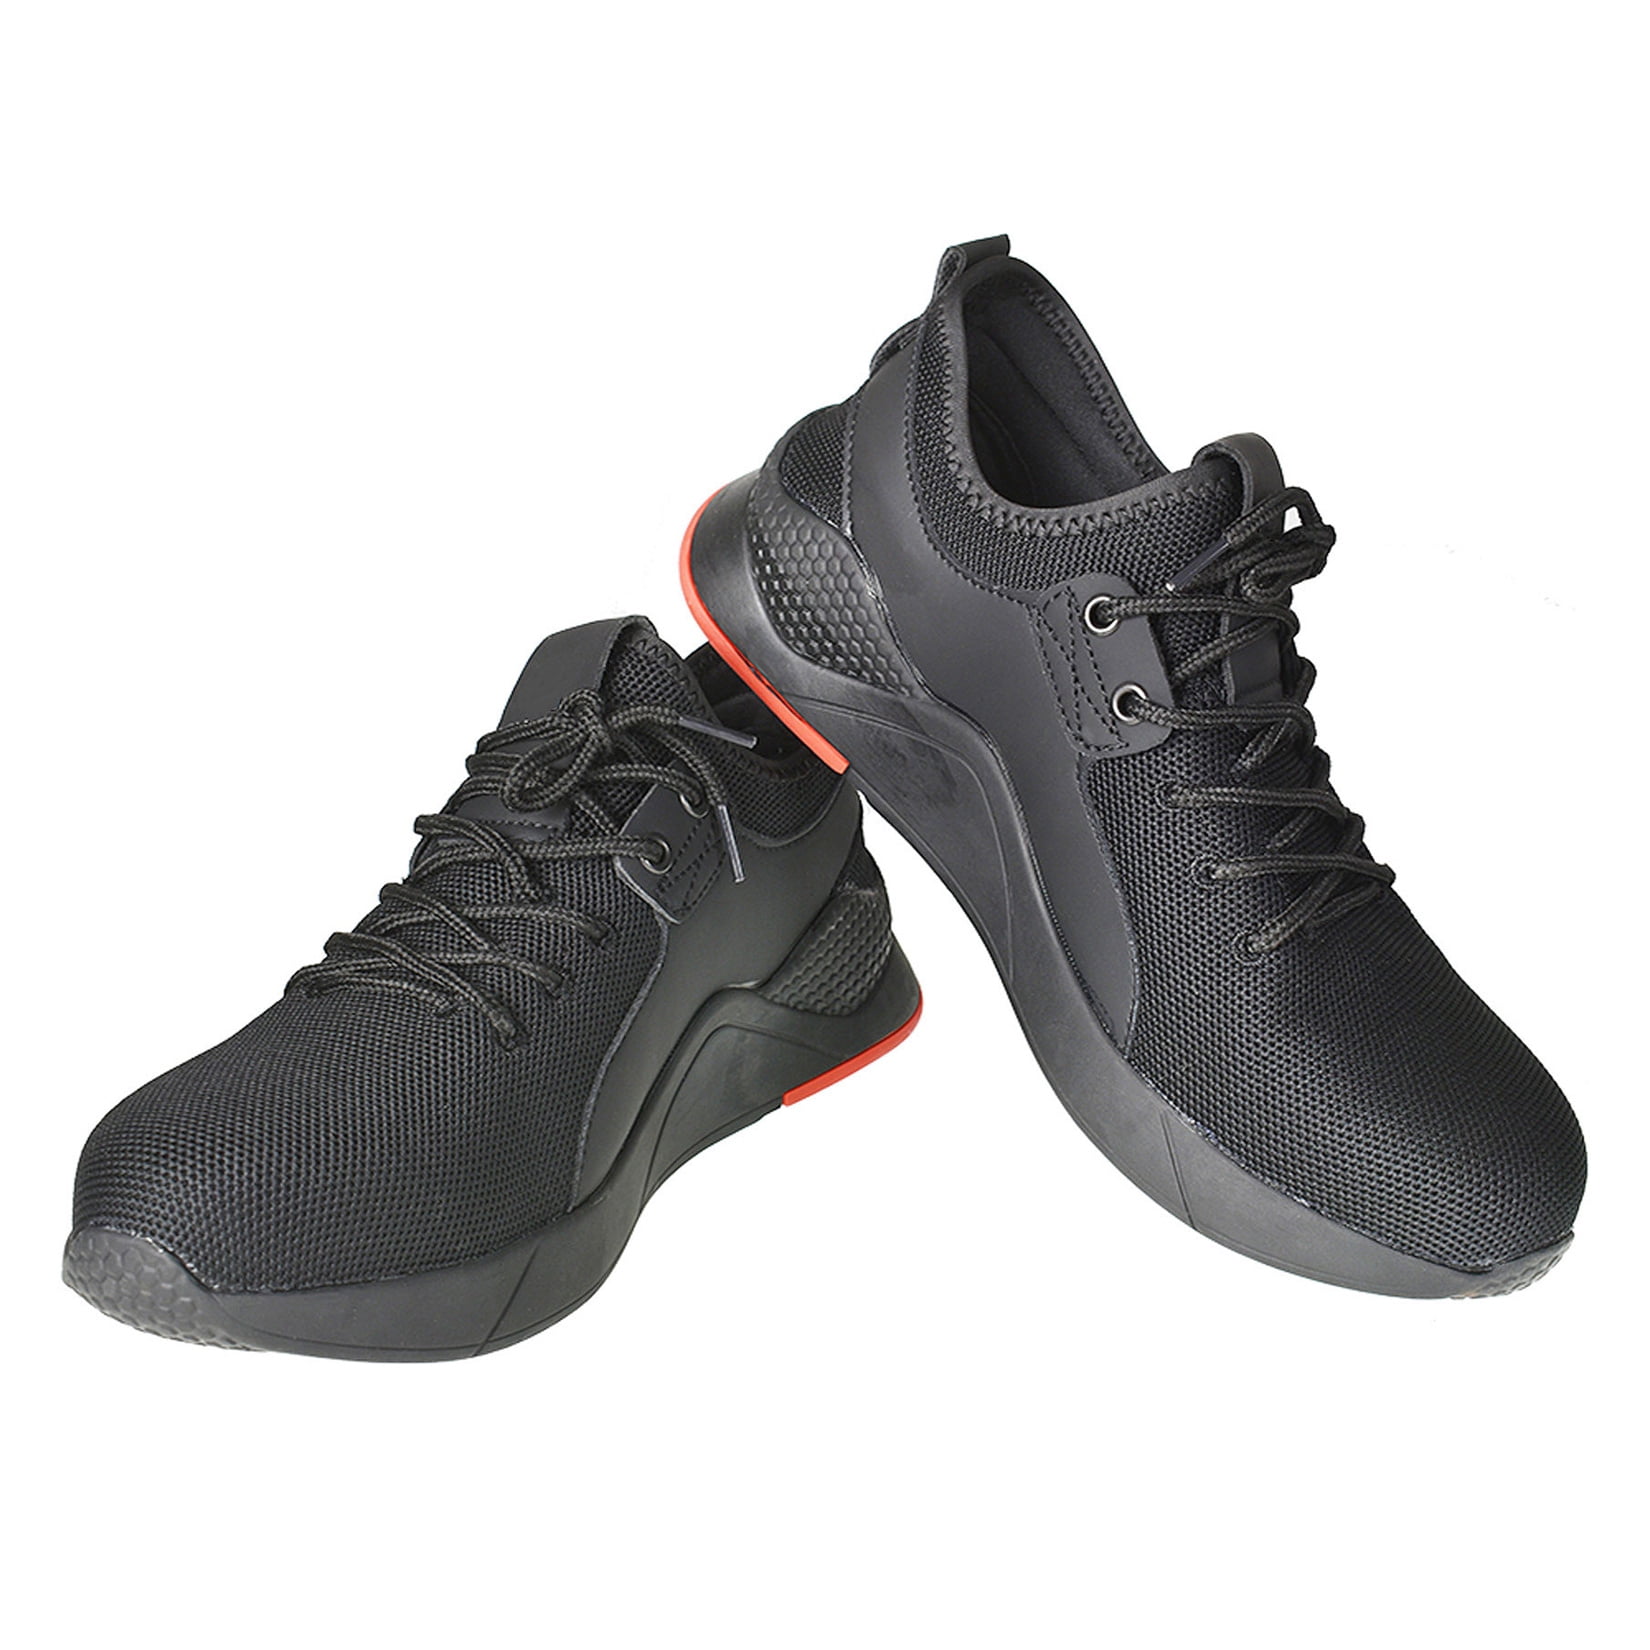 Men's Safety Work Bulletproof TPR Boots Shoes Steel Toe Lightweight Sneakers